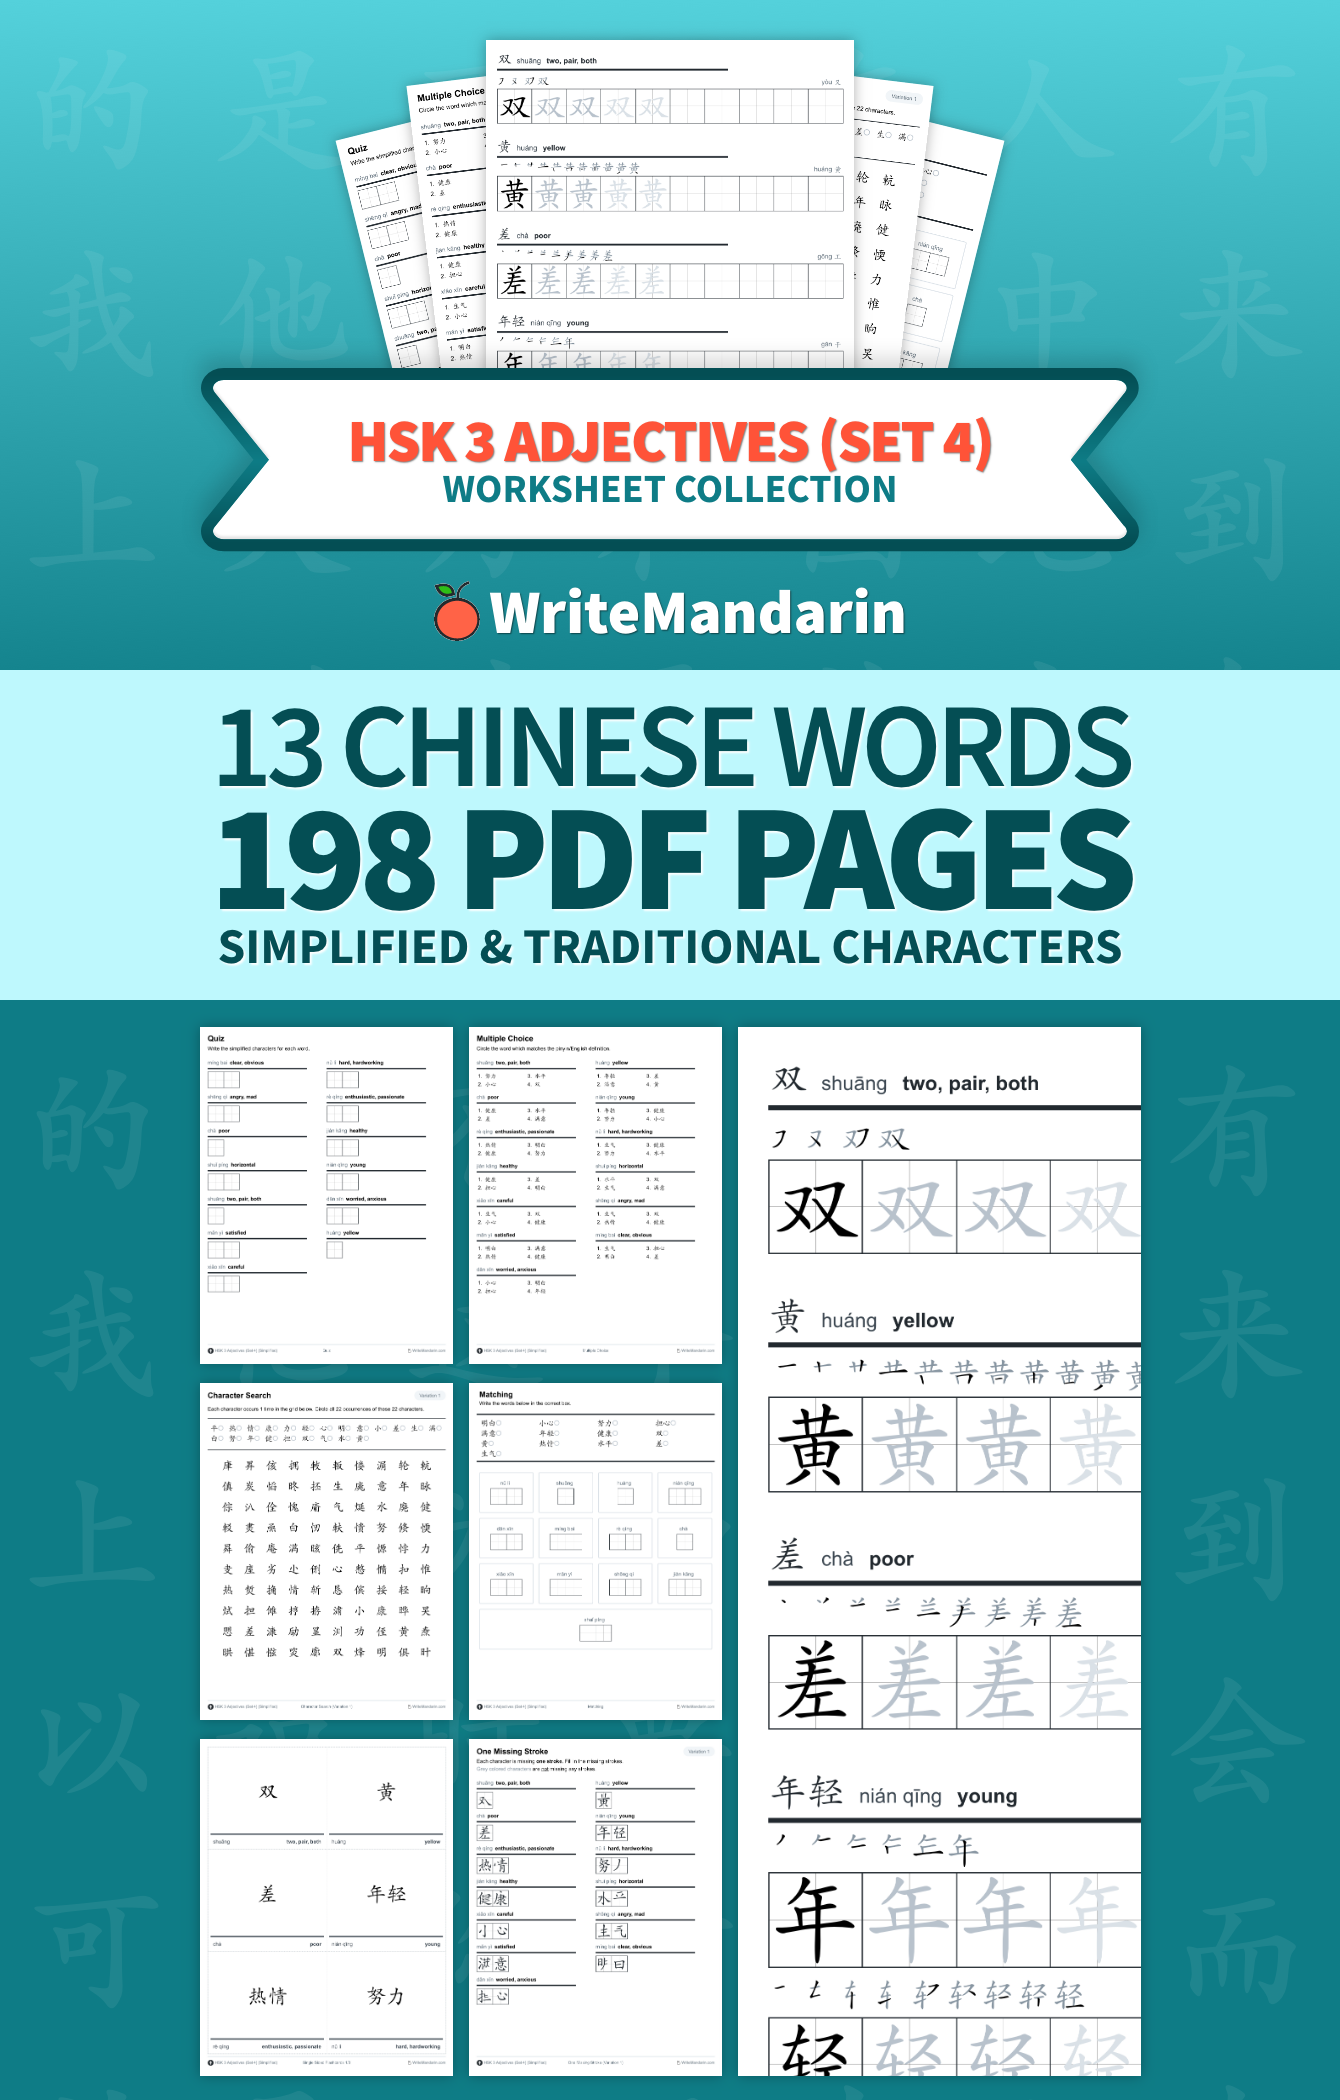 Preview image of HSK 3 Adjectives (Set 4) worksheet collection